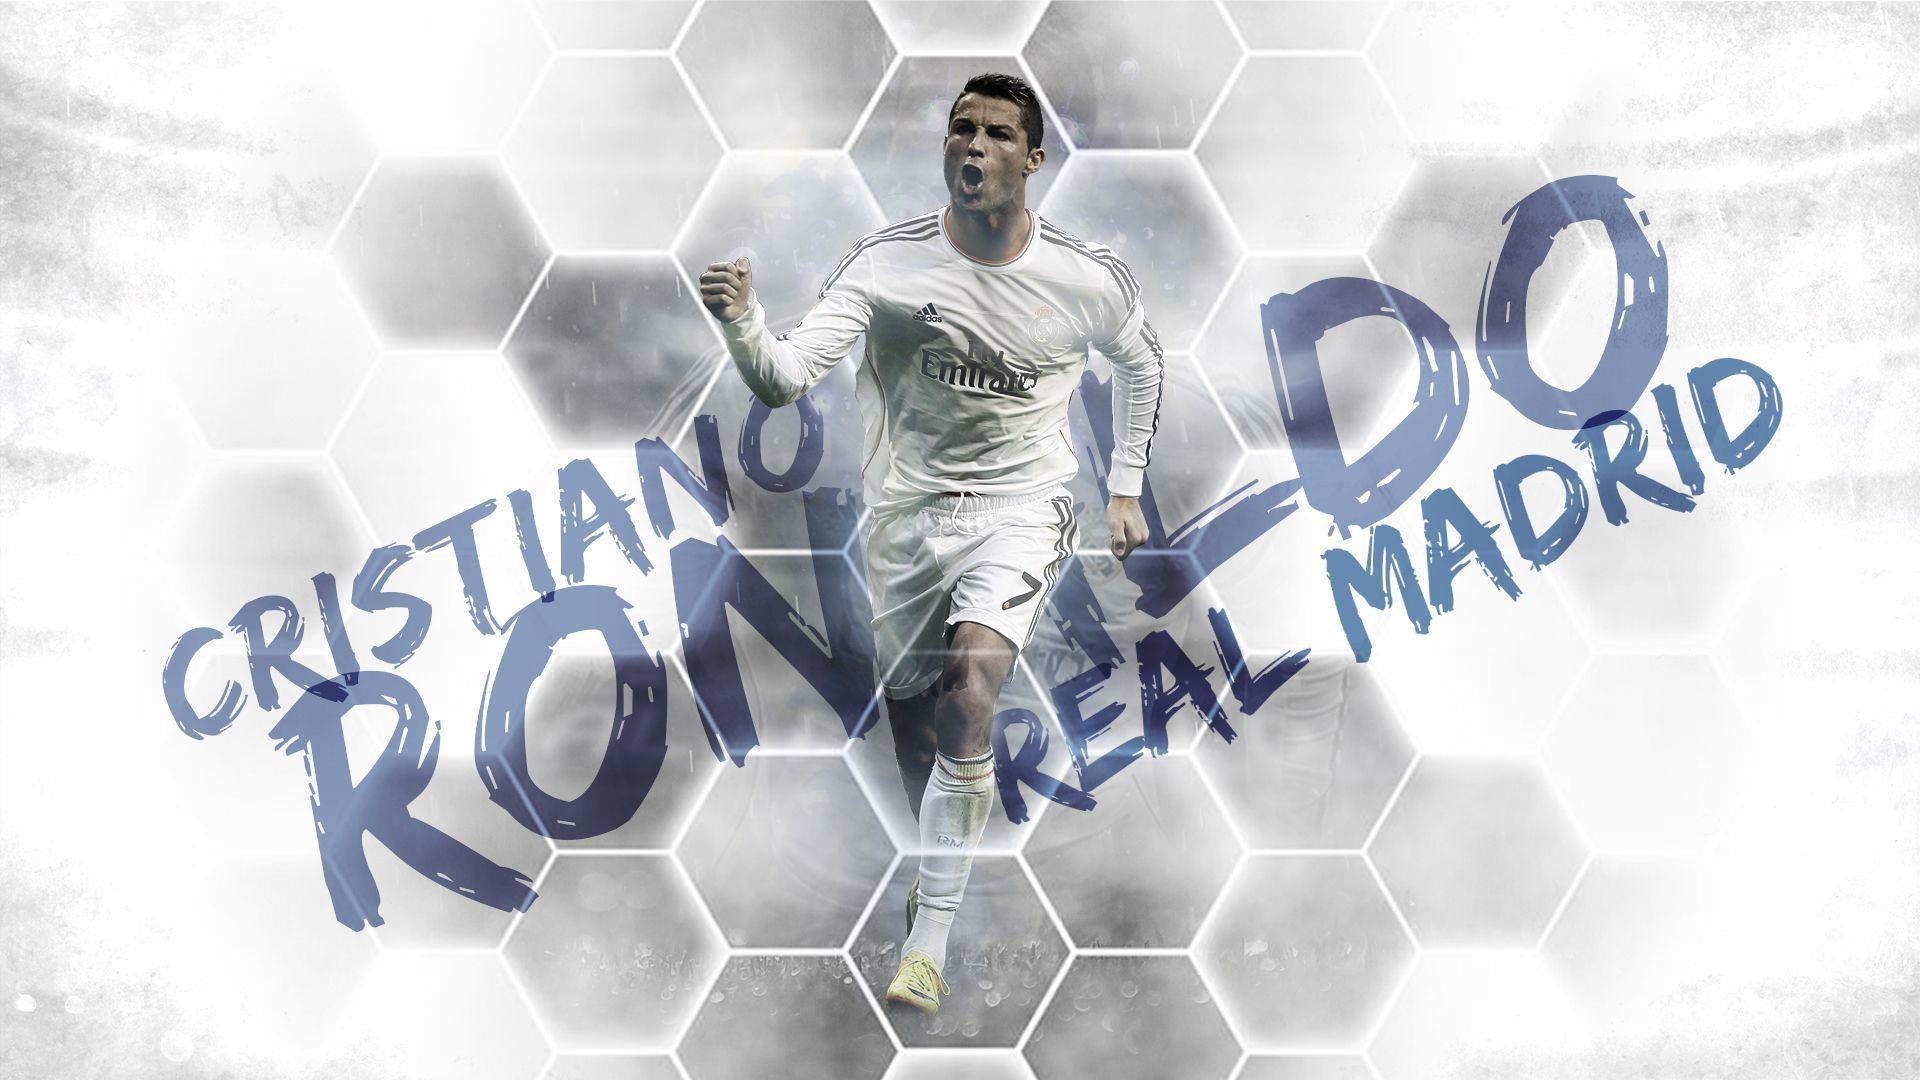 Ronaldo Real Madrid HD Wallpaper 2. Best Wallpaper Gallery